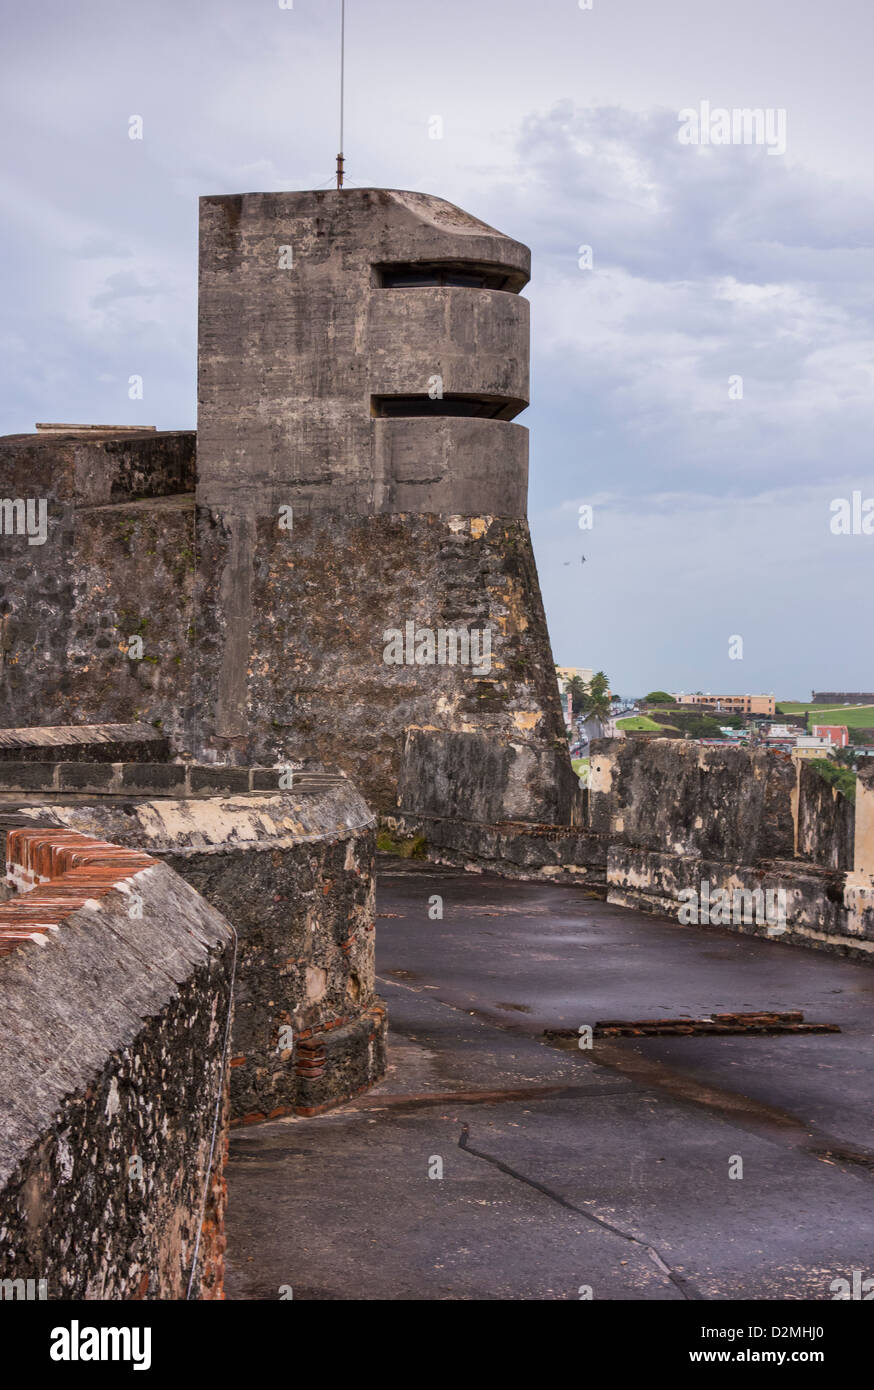 OLD SAN JUAN, PUERTO RICO - Weltkrieg Beobachtung Turm im Castillo San Cristobal Fort. Stockfoto